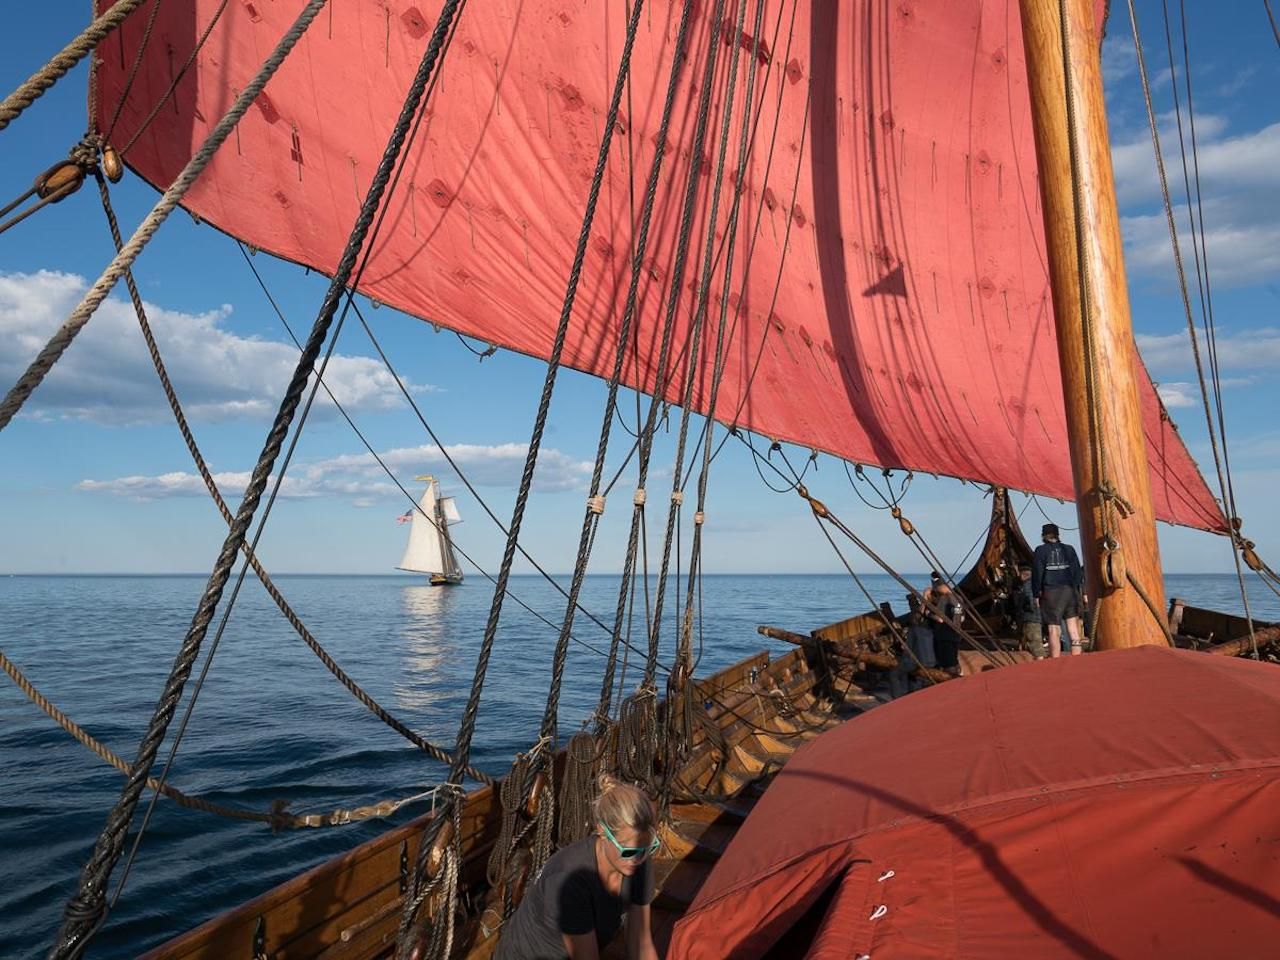 World's largest Viking ship at sea